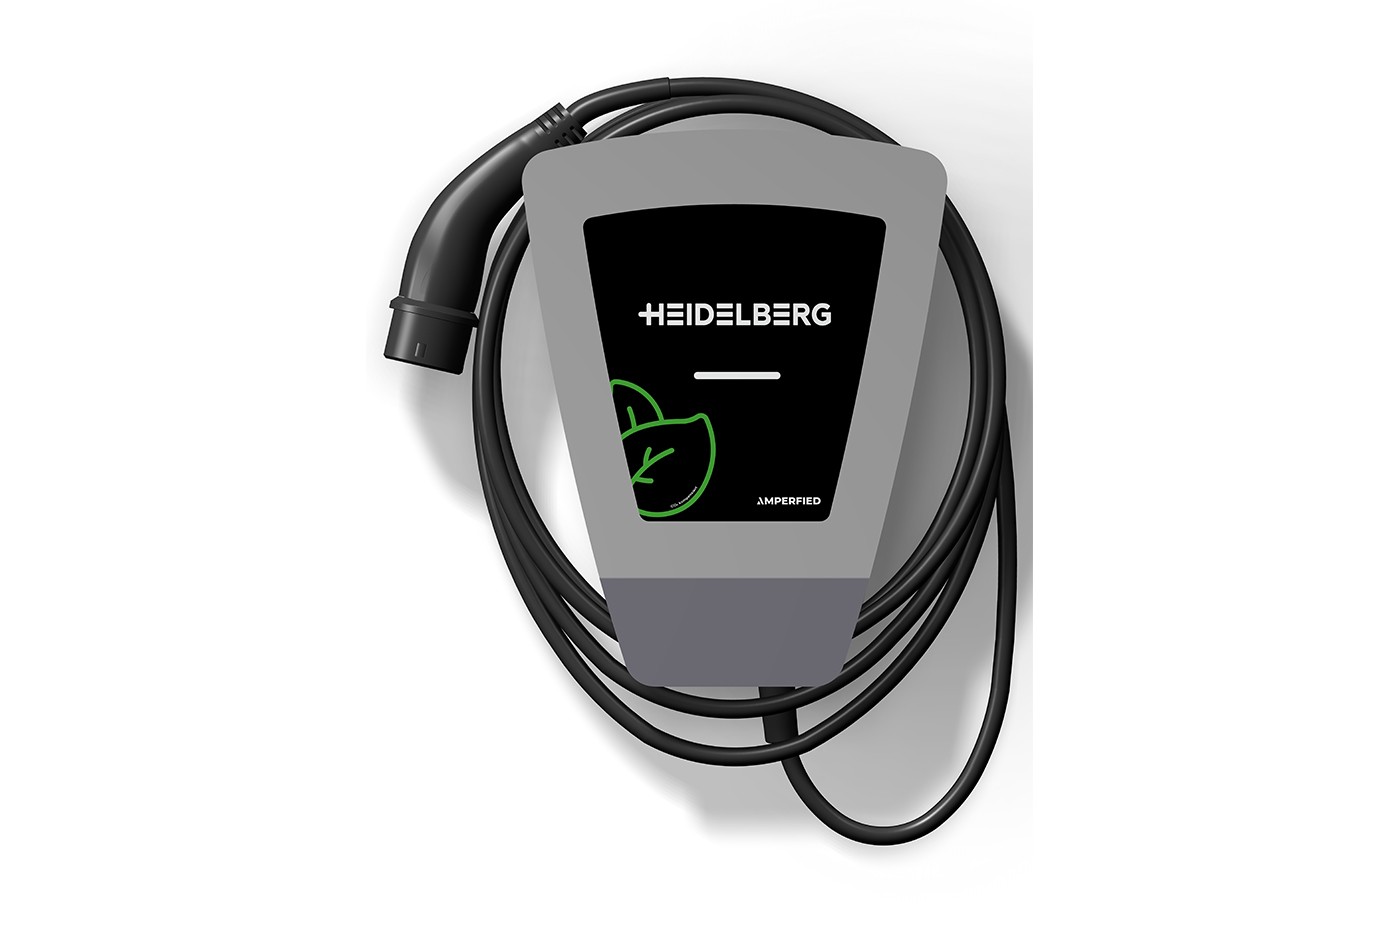 02_Heidelberg-Wallbox-Energy-Control-climate_frontal_1